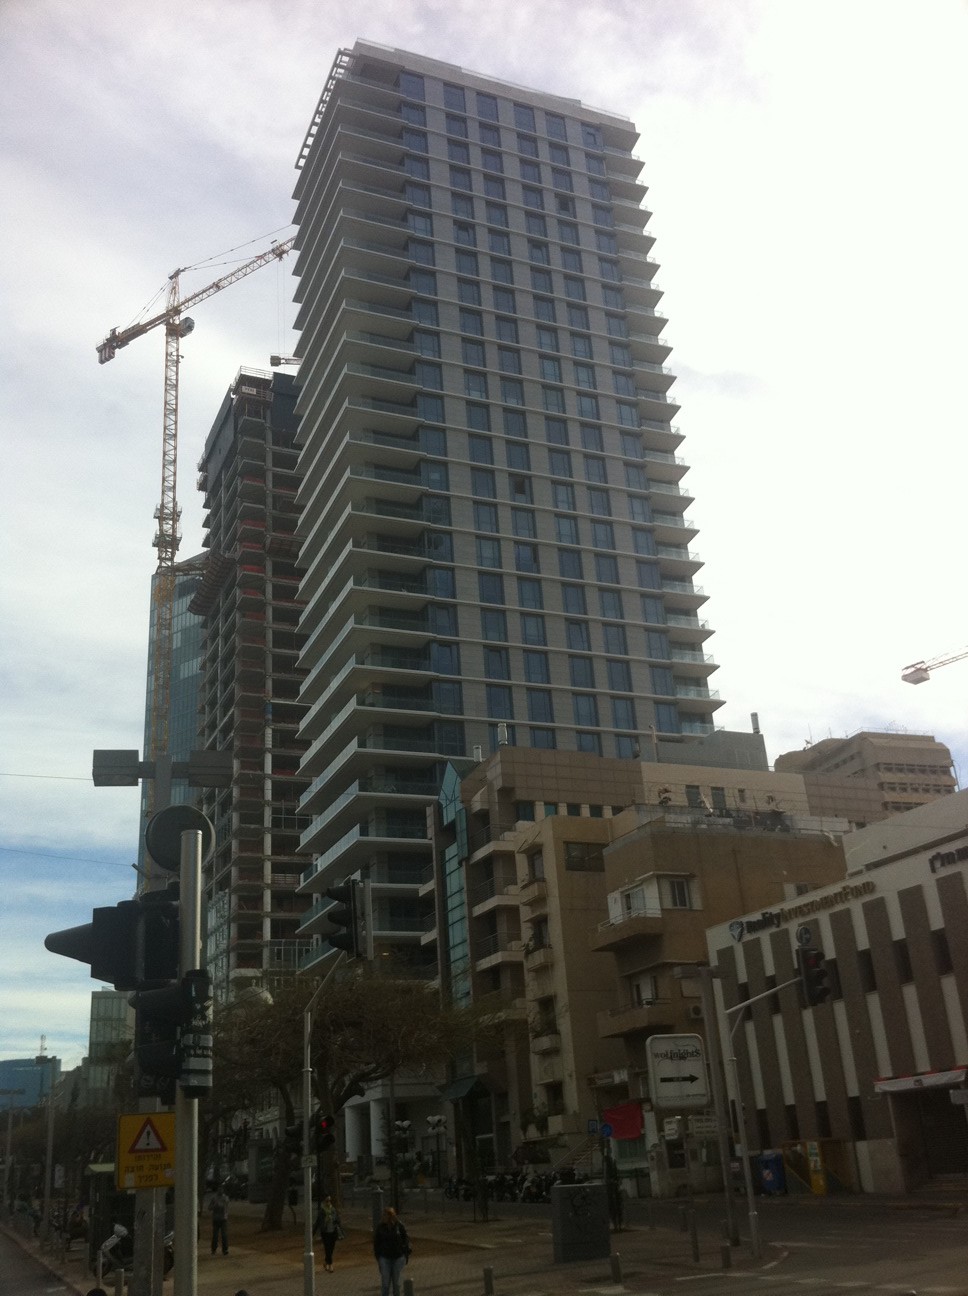 Tel Aviv Real Estate News | Rothschild 30 Penthouse Sells for 87M NIS